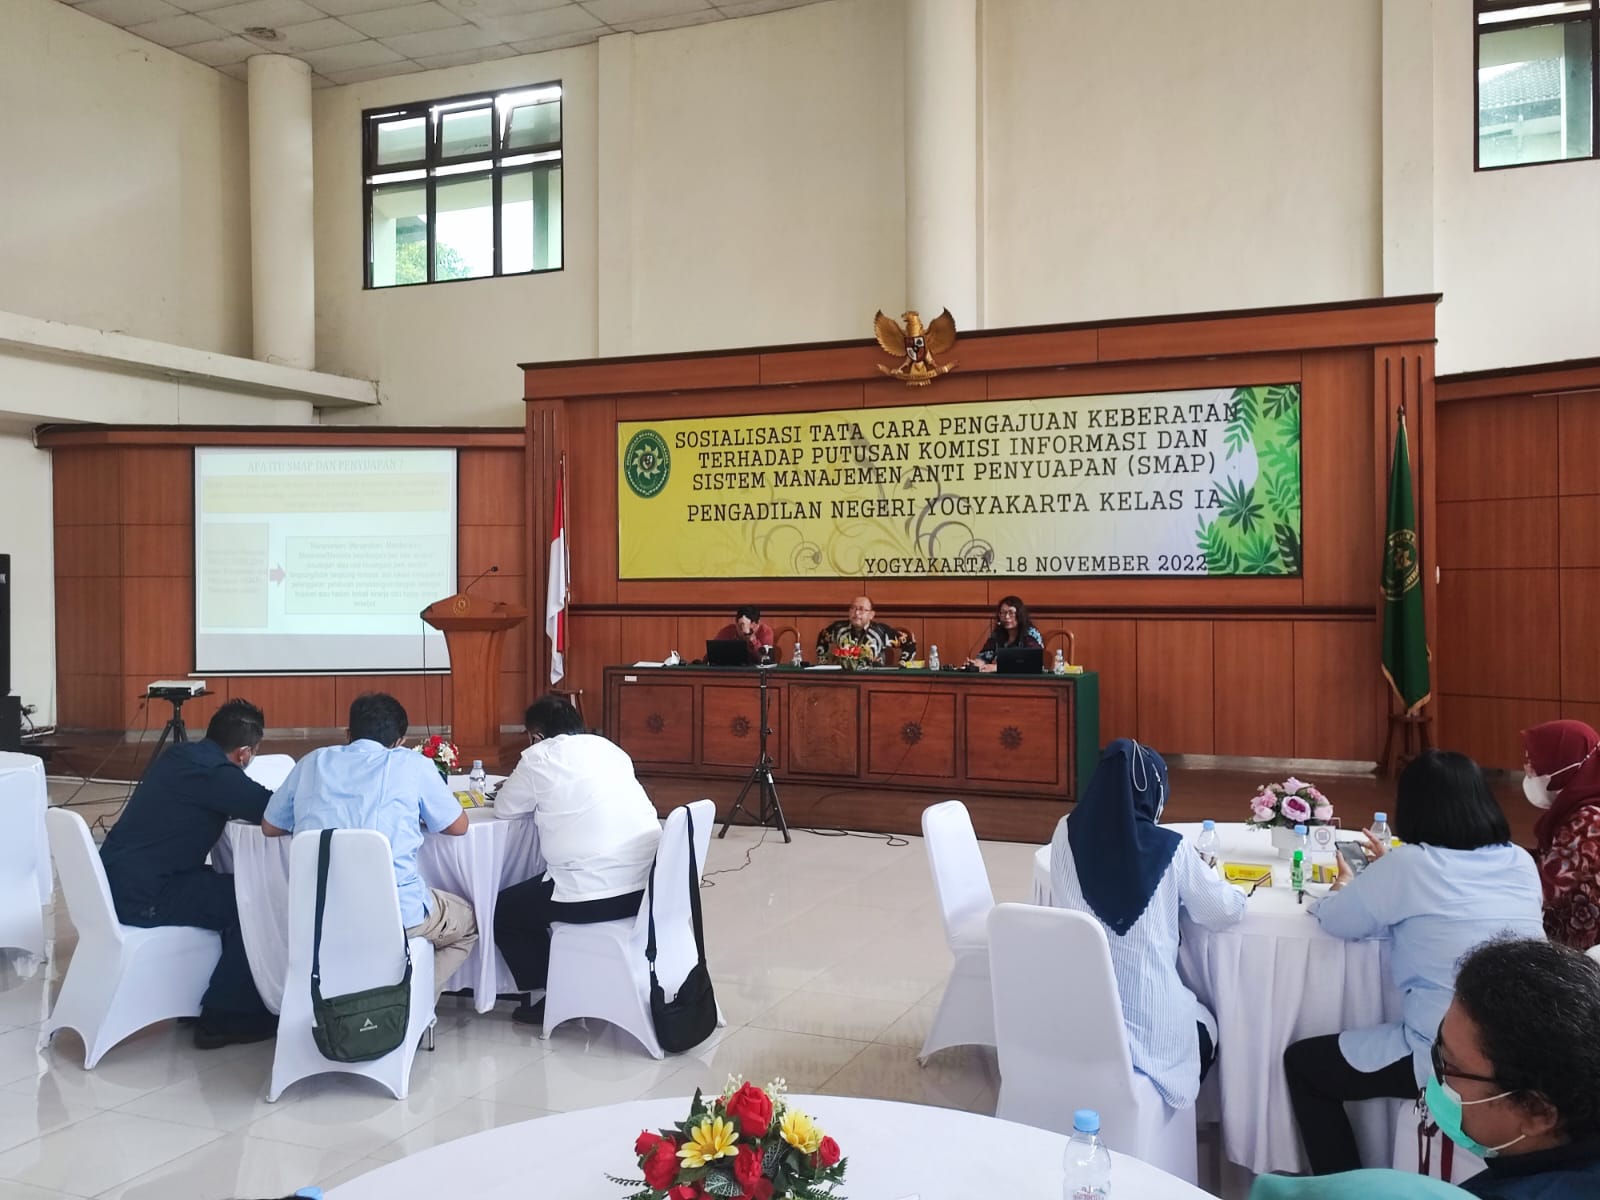 Sosialisasi Tata Cara Pengajuan Keberatan Terhadap Putusan Komisi Informasi dan SMAP Pengadilan Negeri Yogyakarta